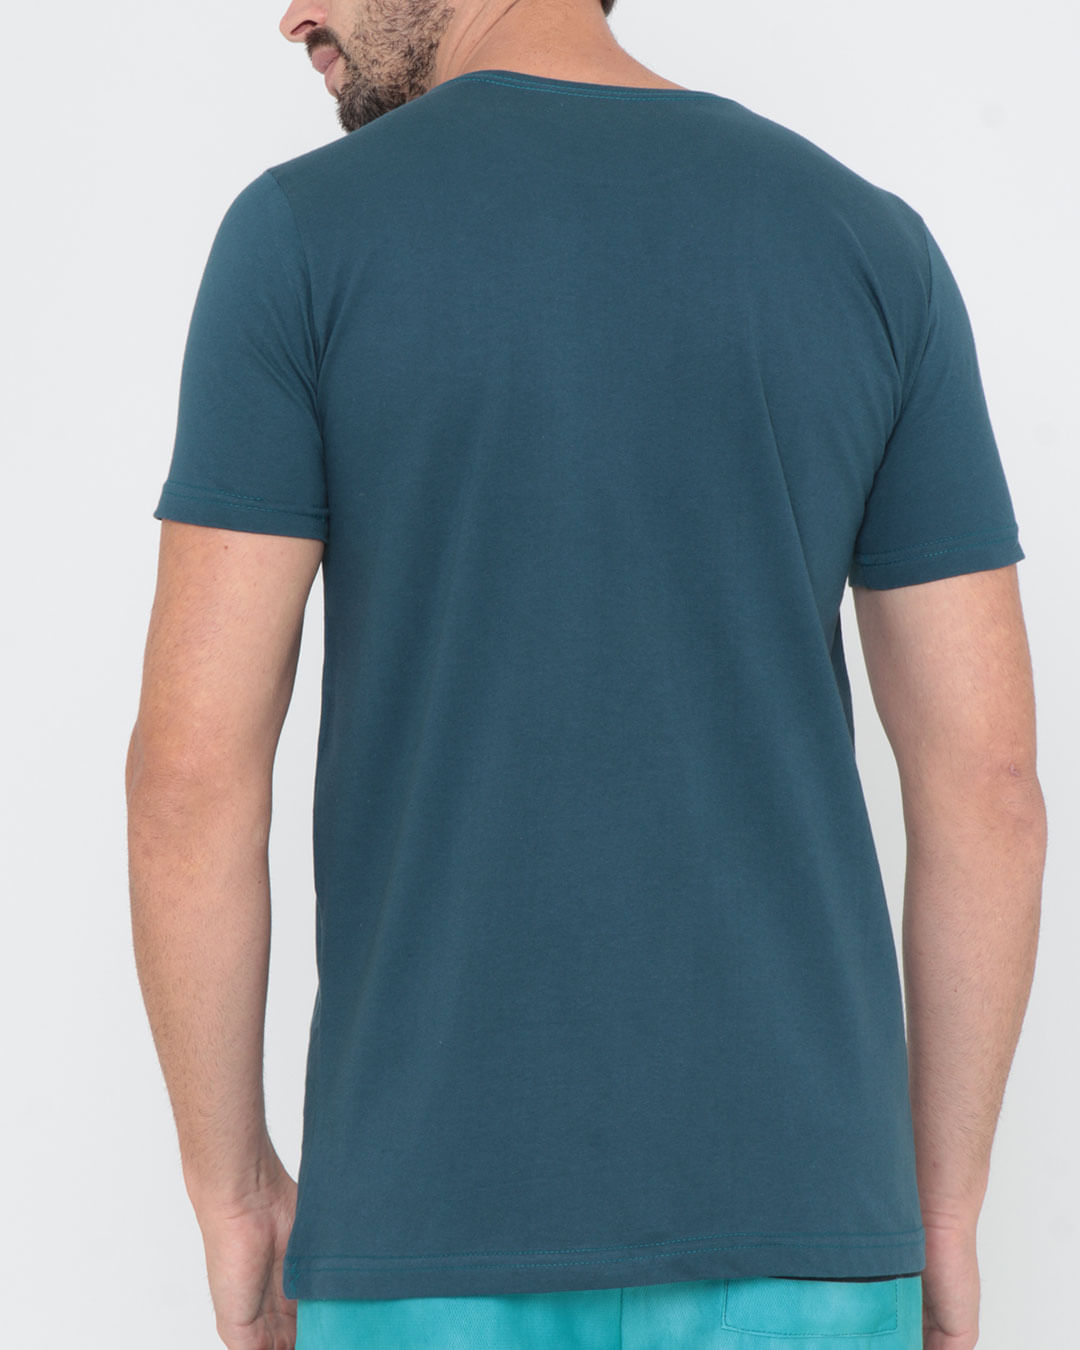 Camiseta-Estampada-Praia-Verde-Petroleo